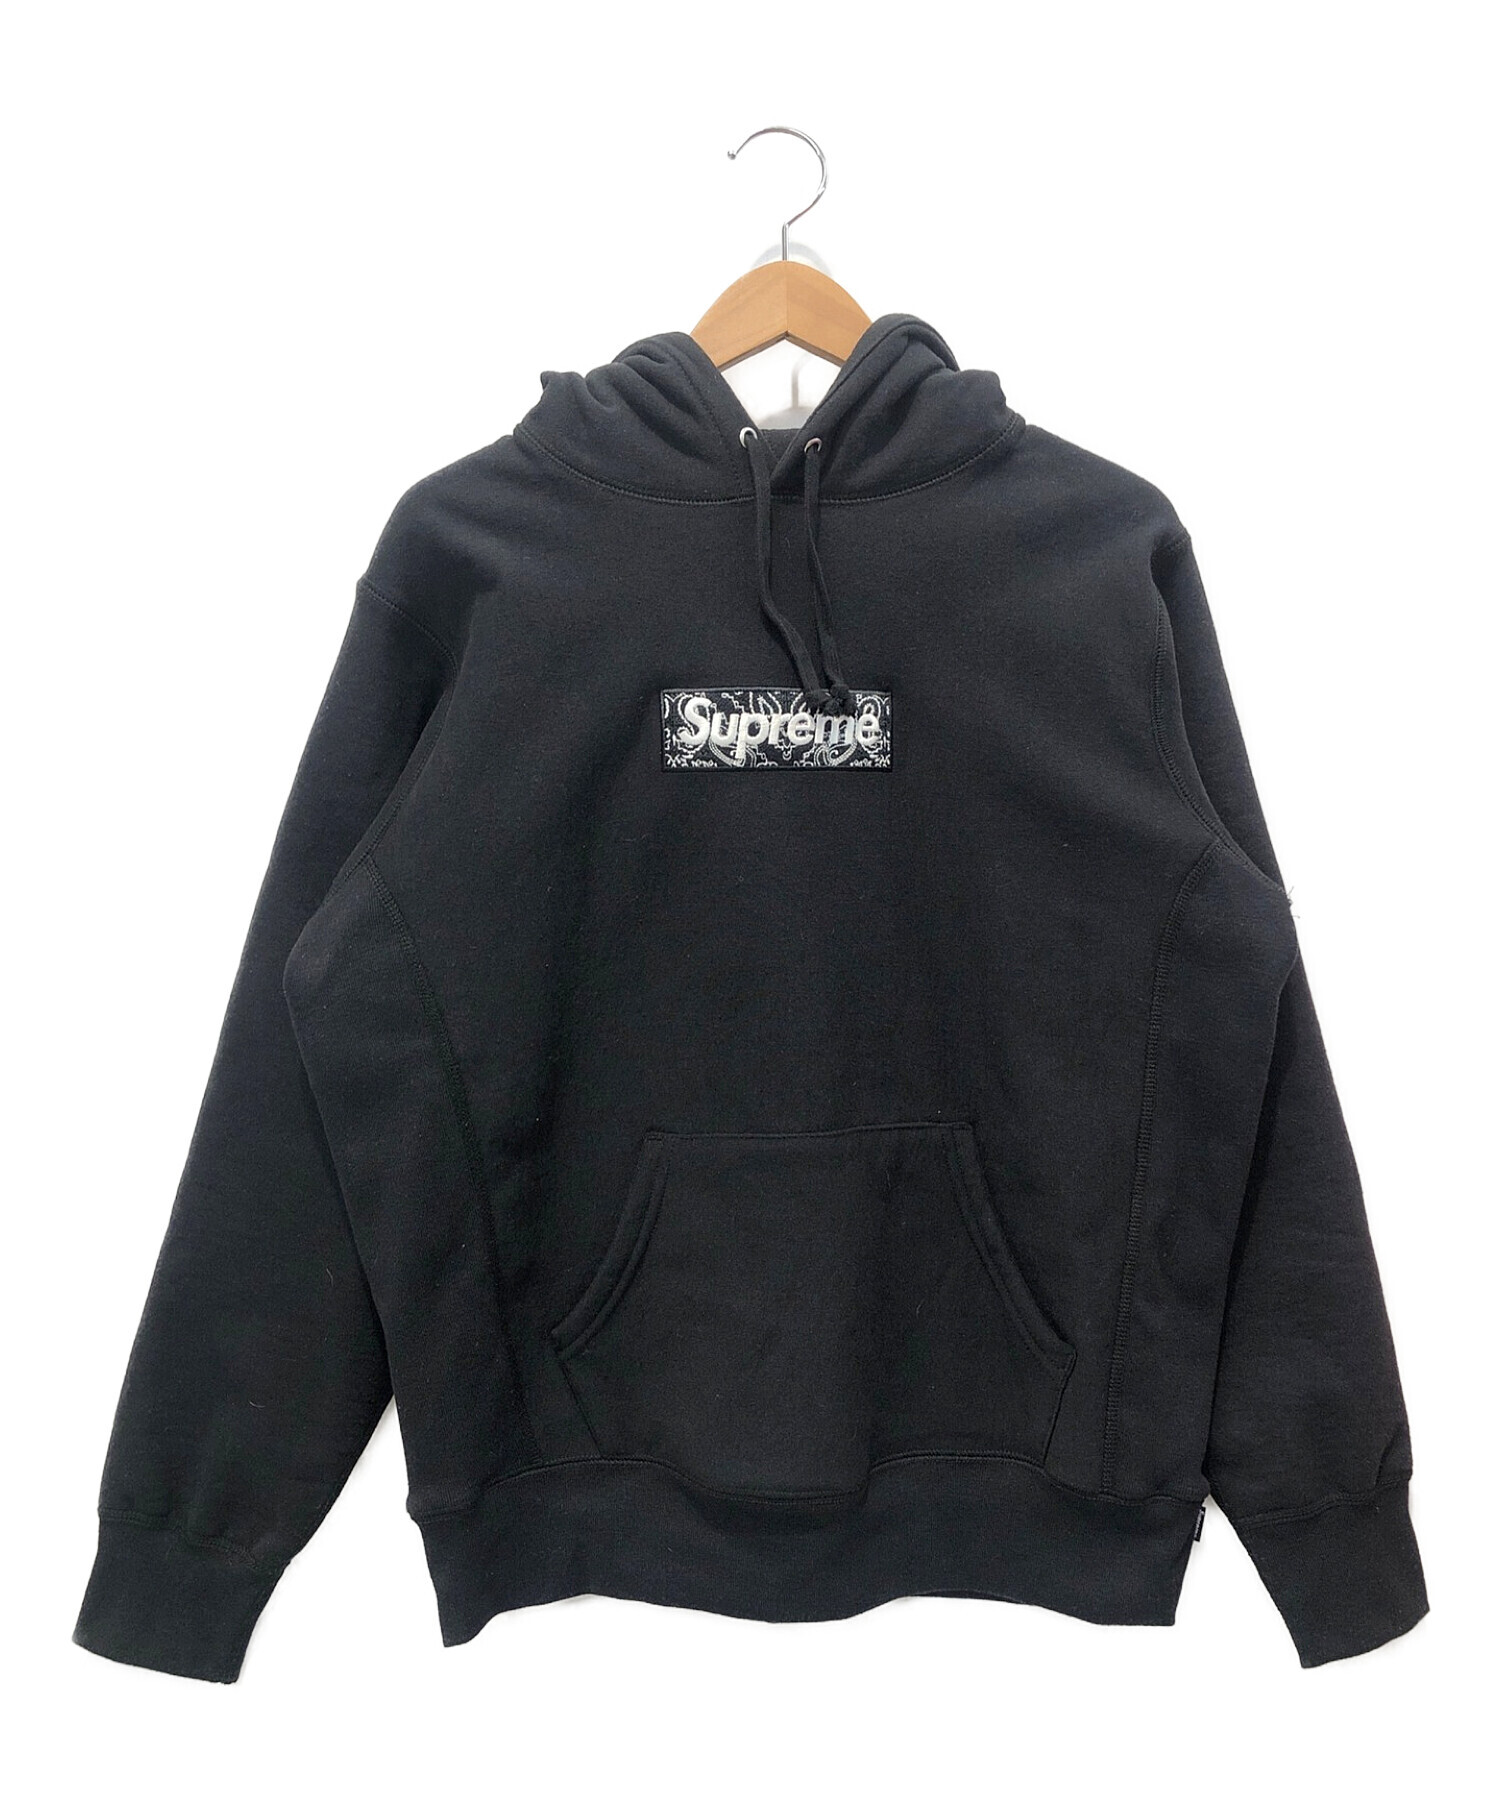 Sサイズ Supreme Box Logo Hooded SweatshirtサイズS - パーカー